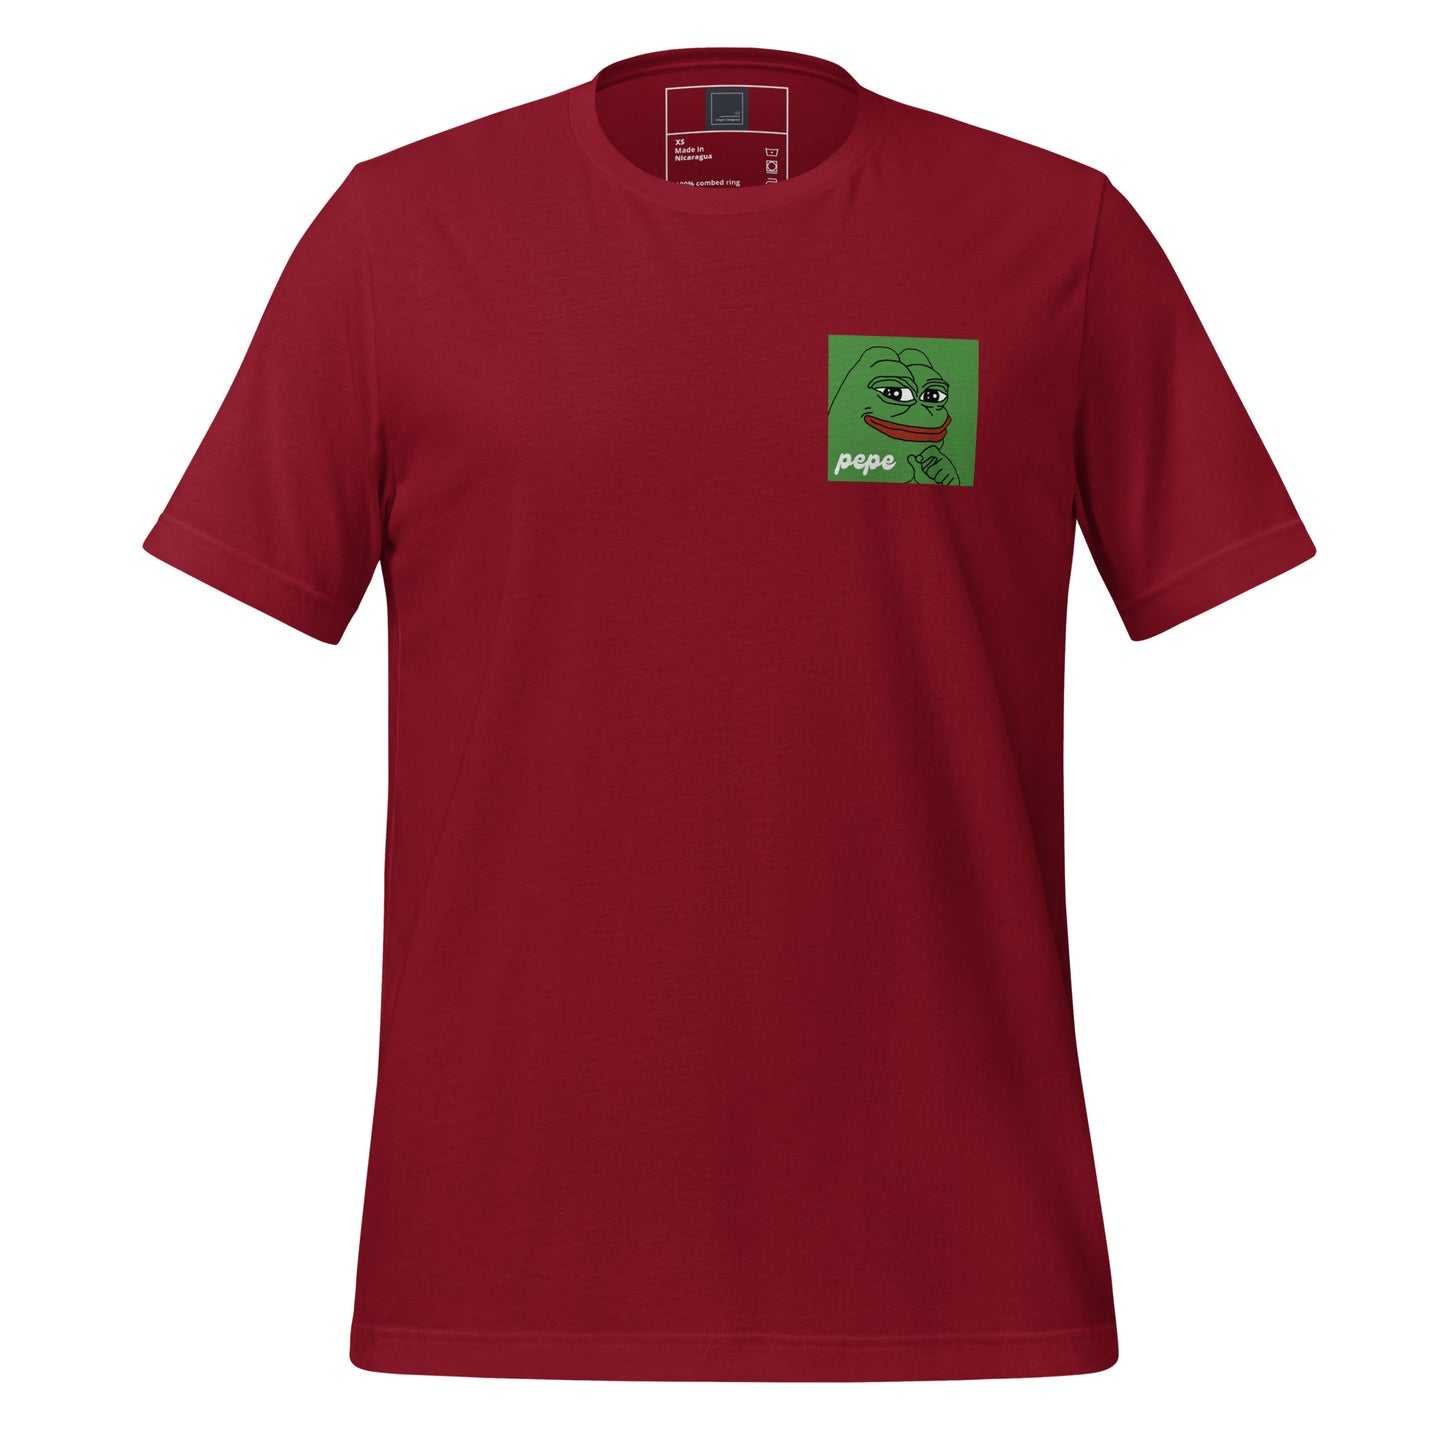 Pepe t-shirt